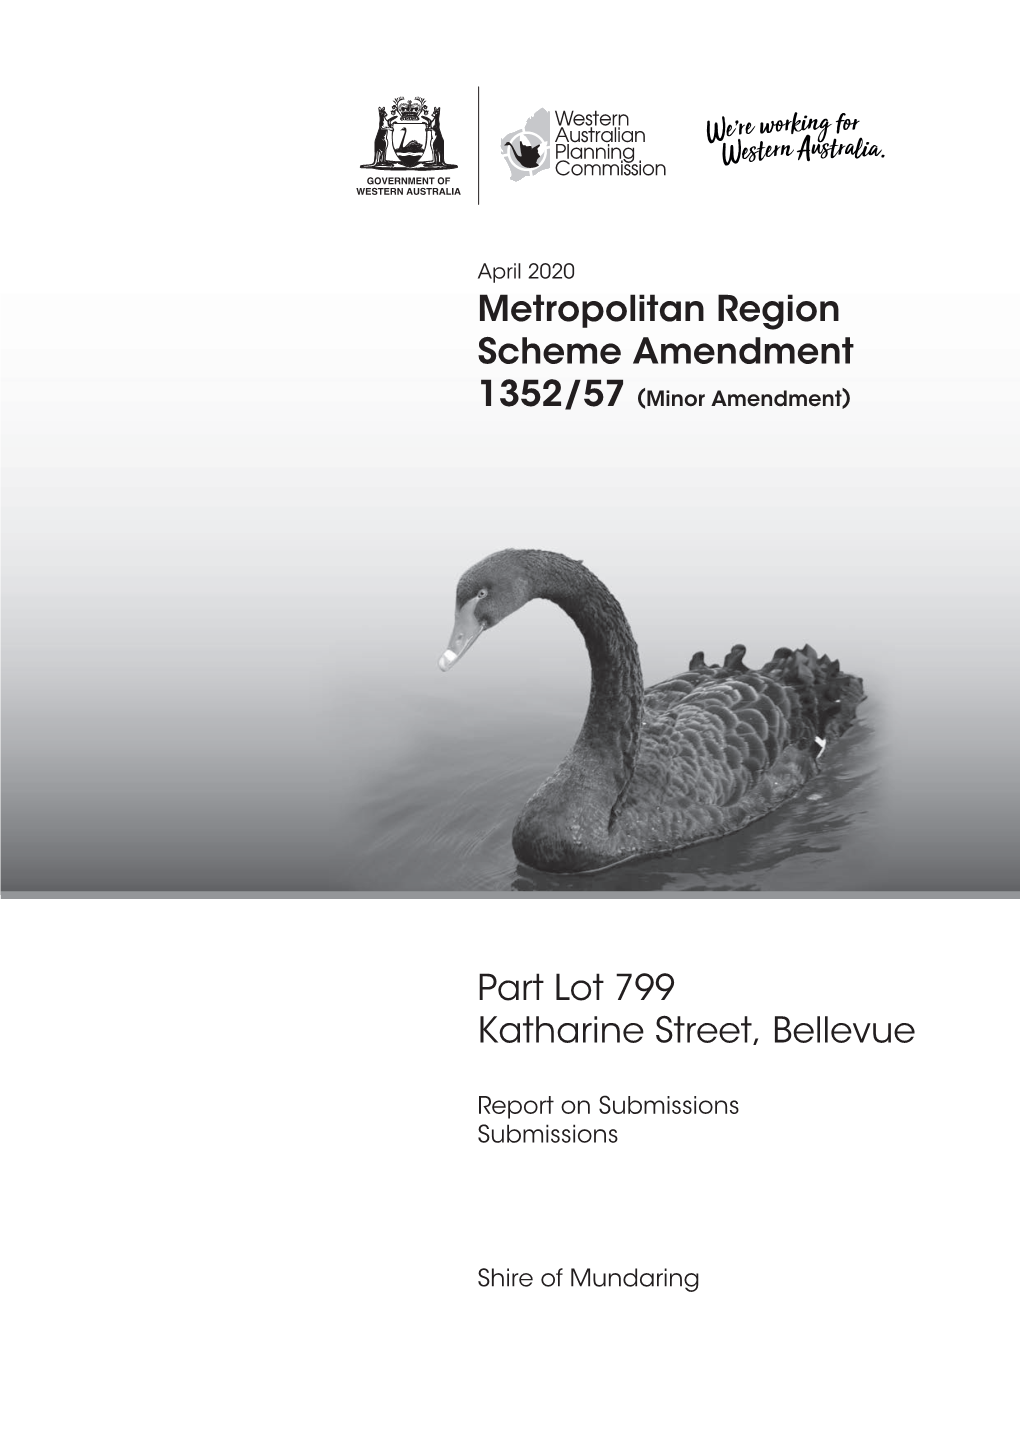 Metropolitan Region Scheme Amendment 1352/57 (Minor Amendment)